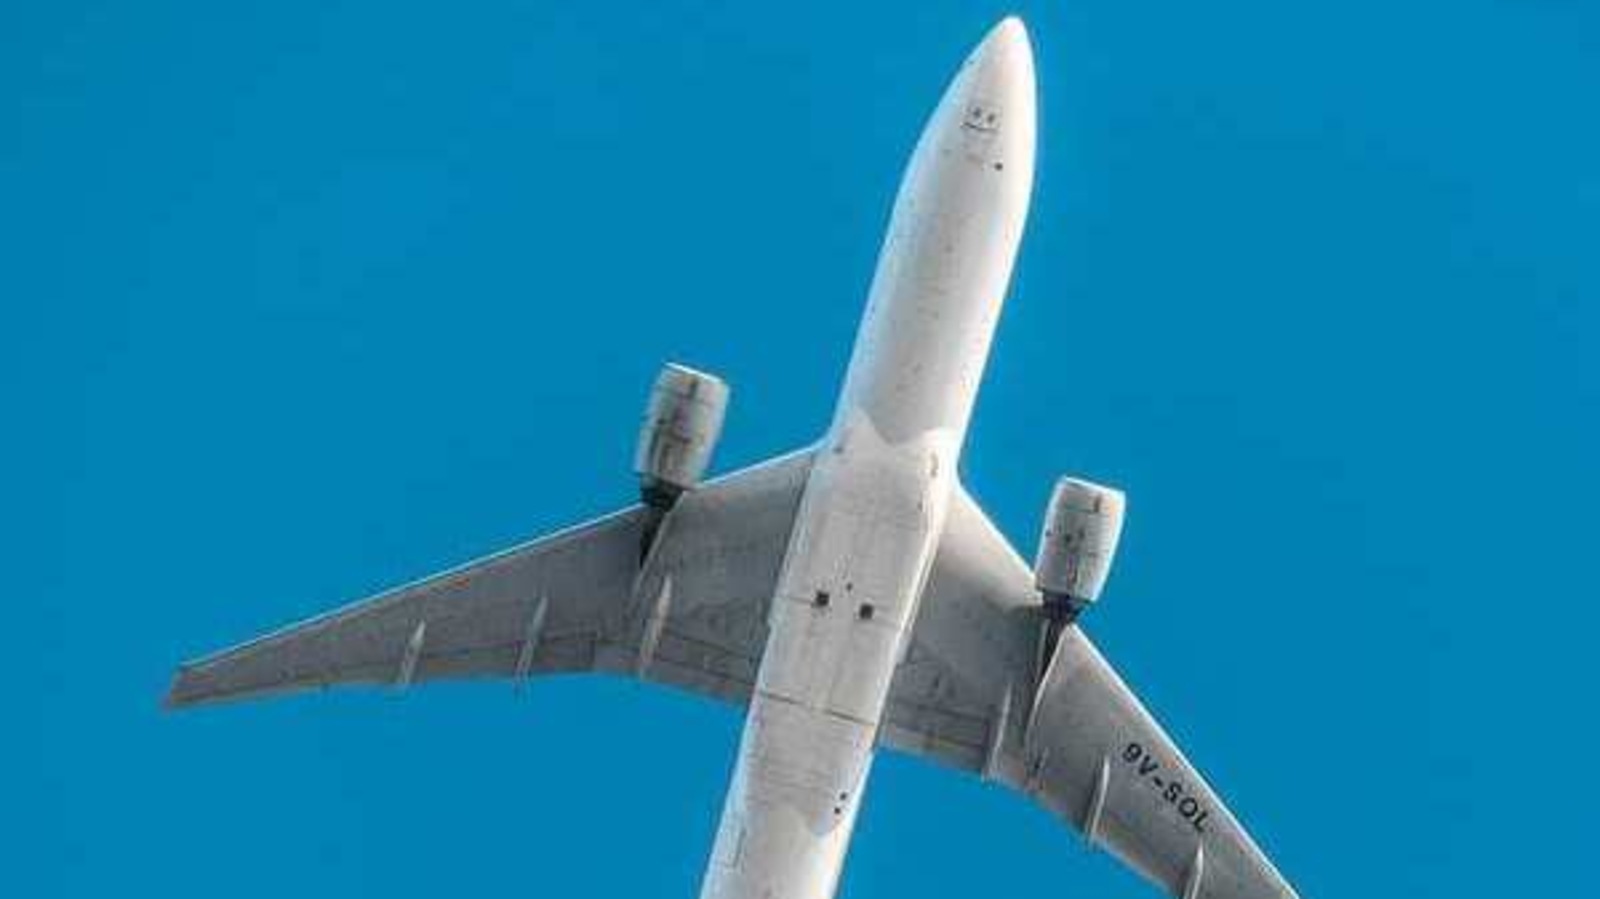 IAG and Air France-KLM Push Back on Ryanair's Narrative